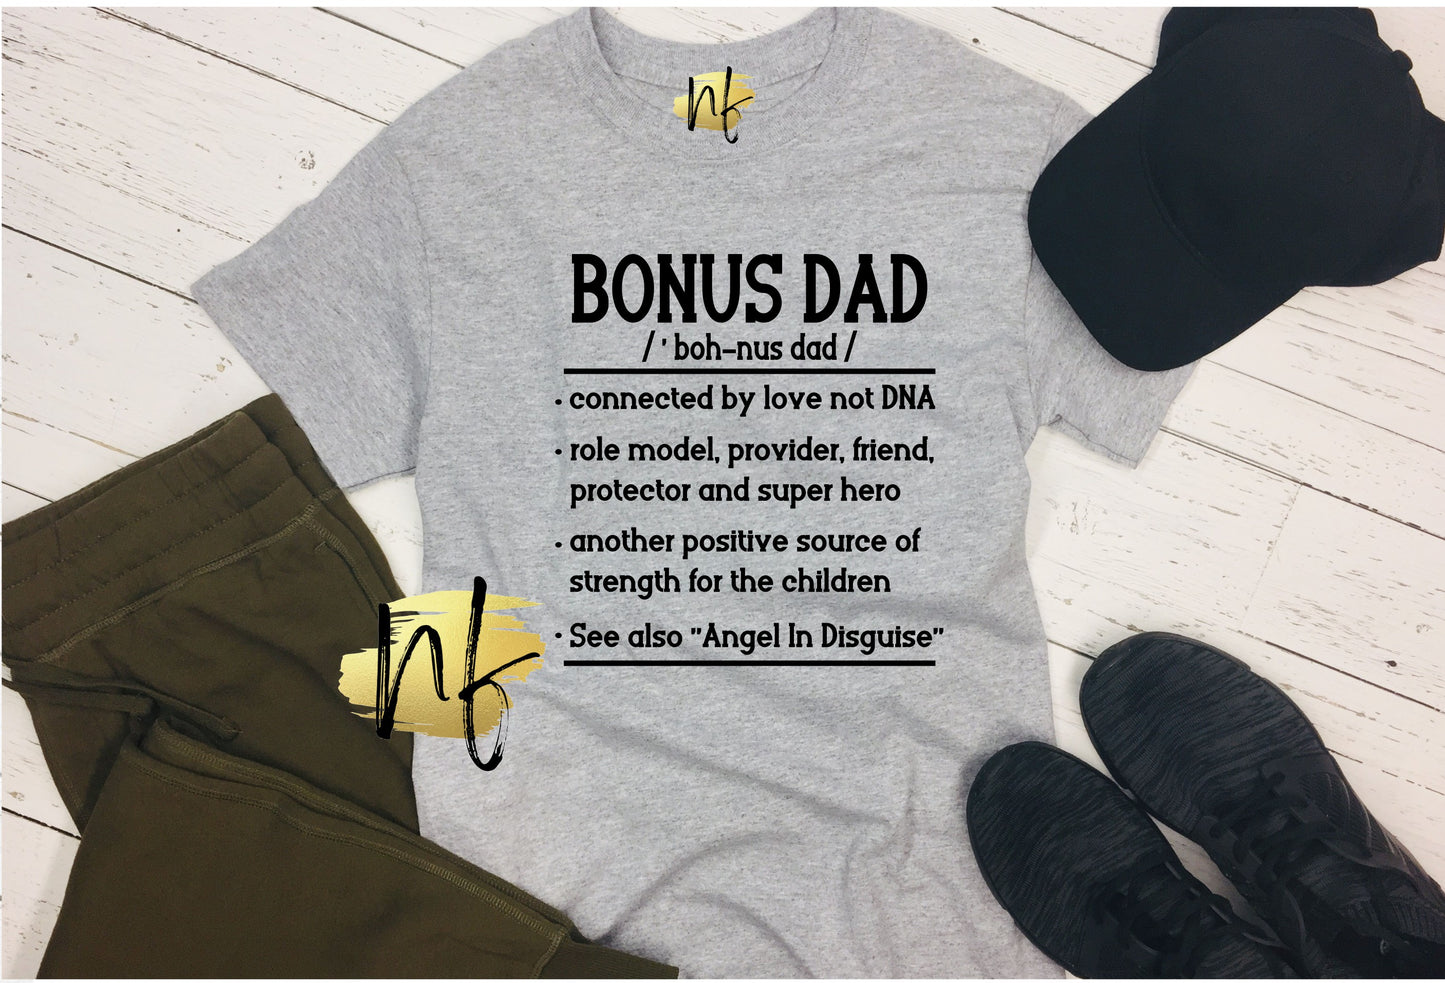 Bonus Dad Definition